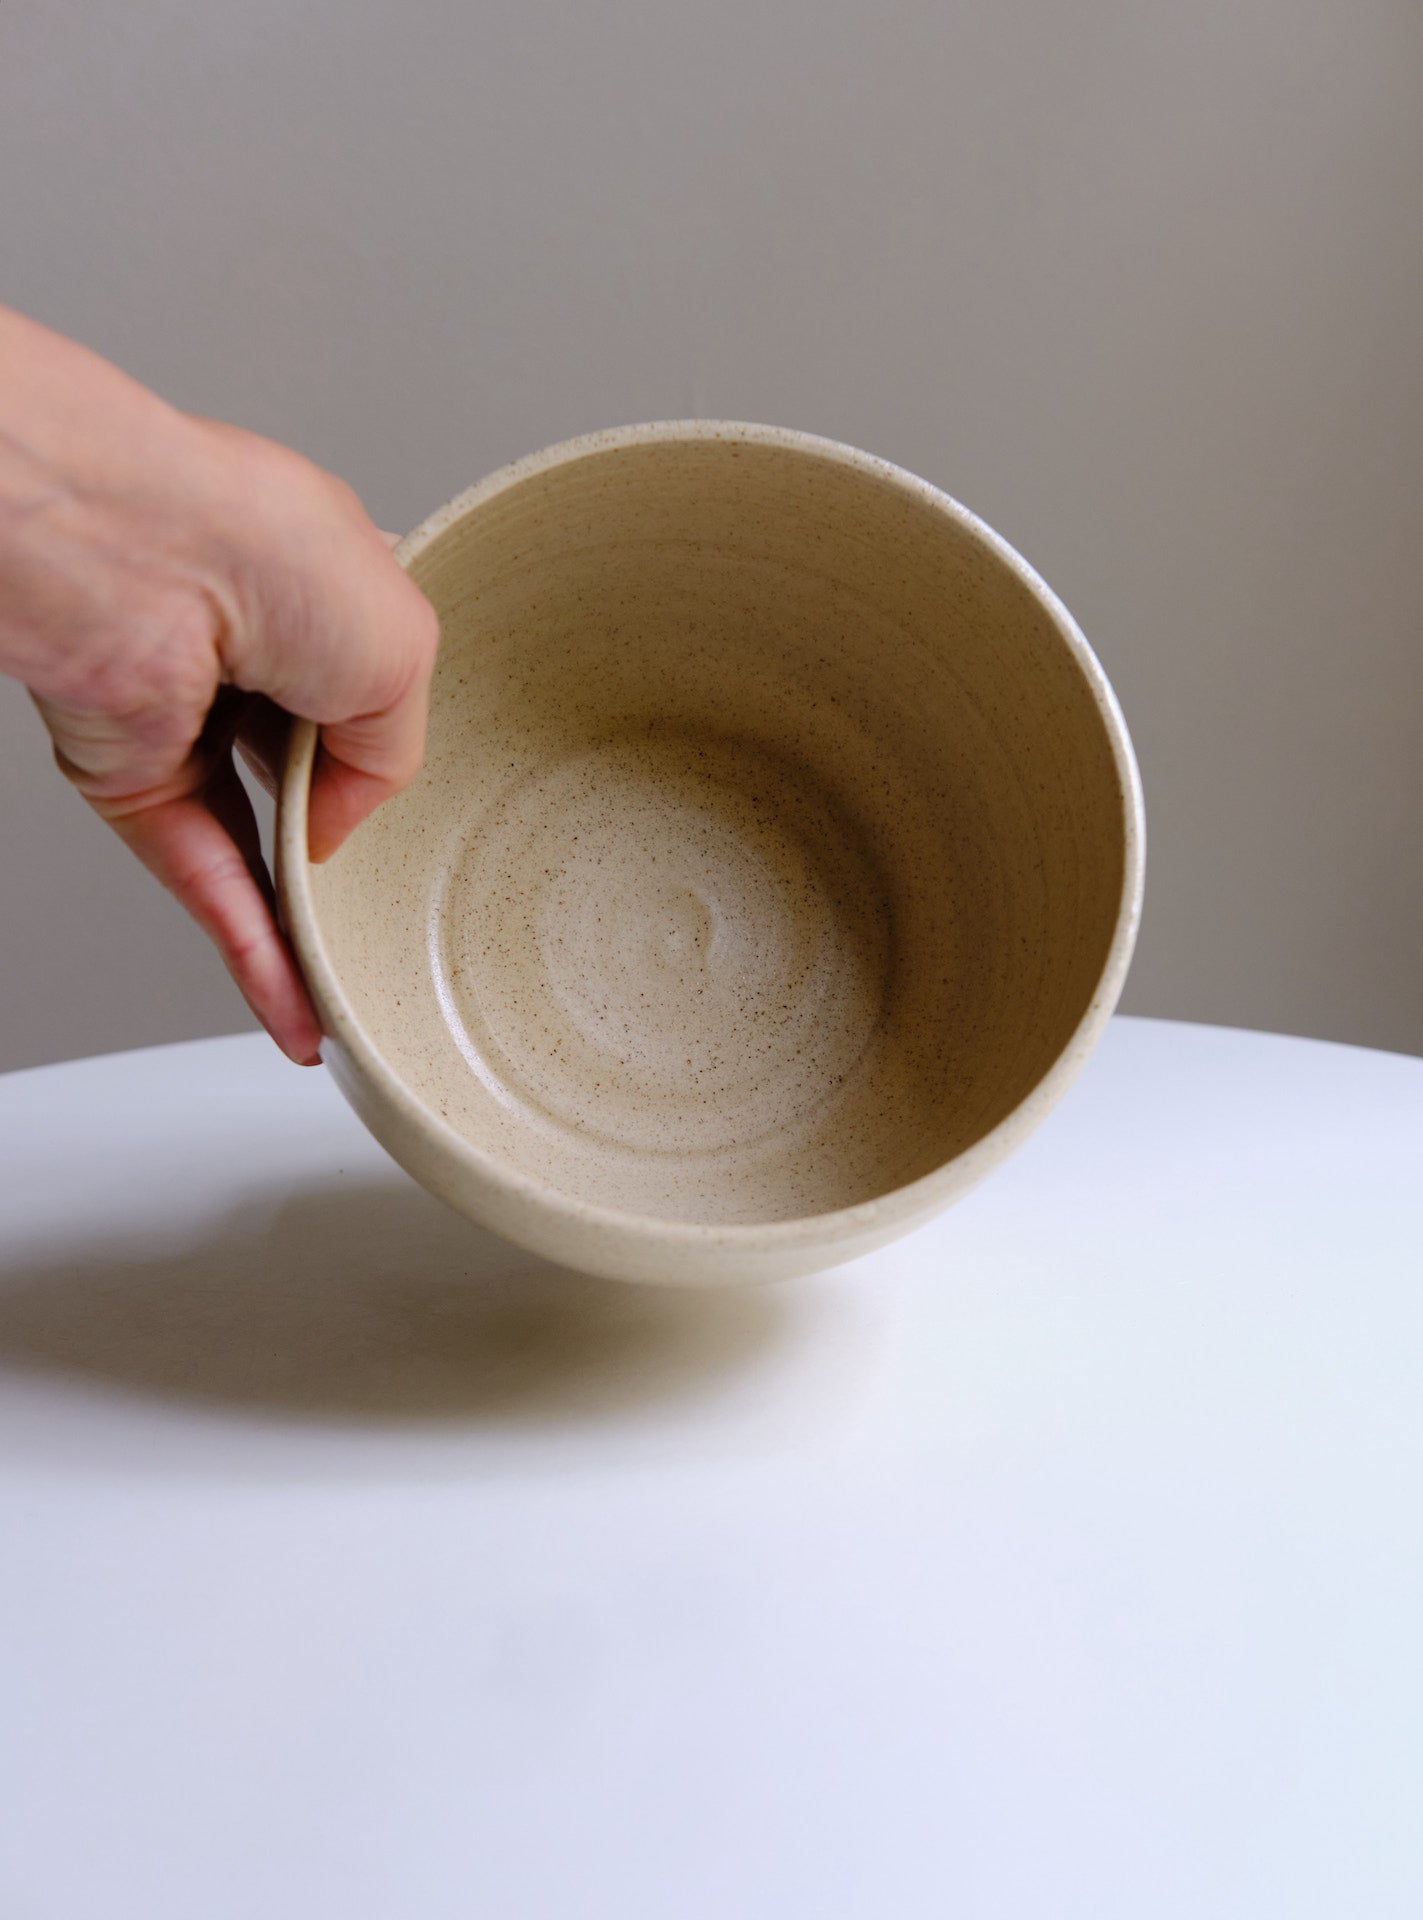 Pedestal bowl no. 17